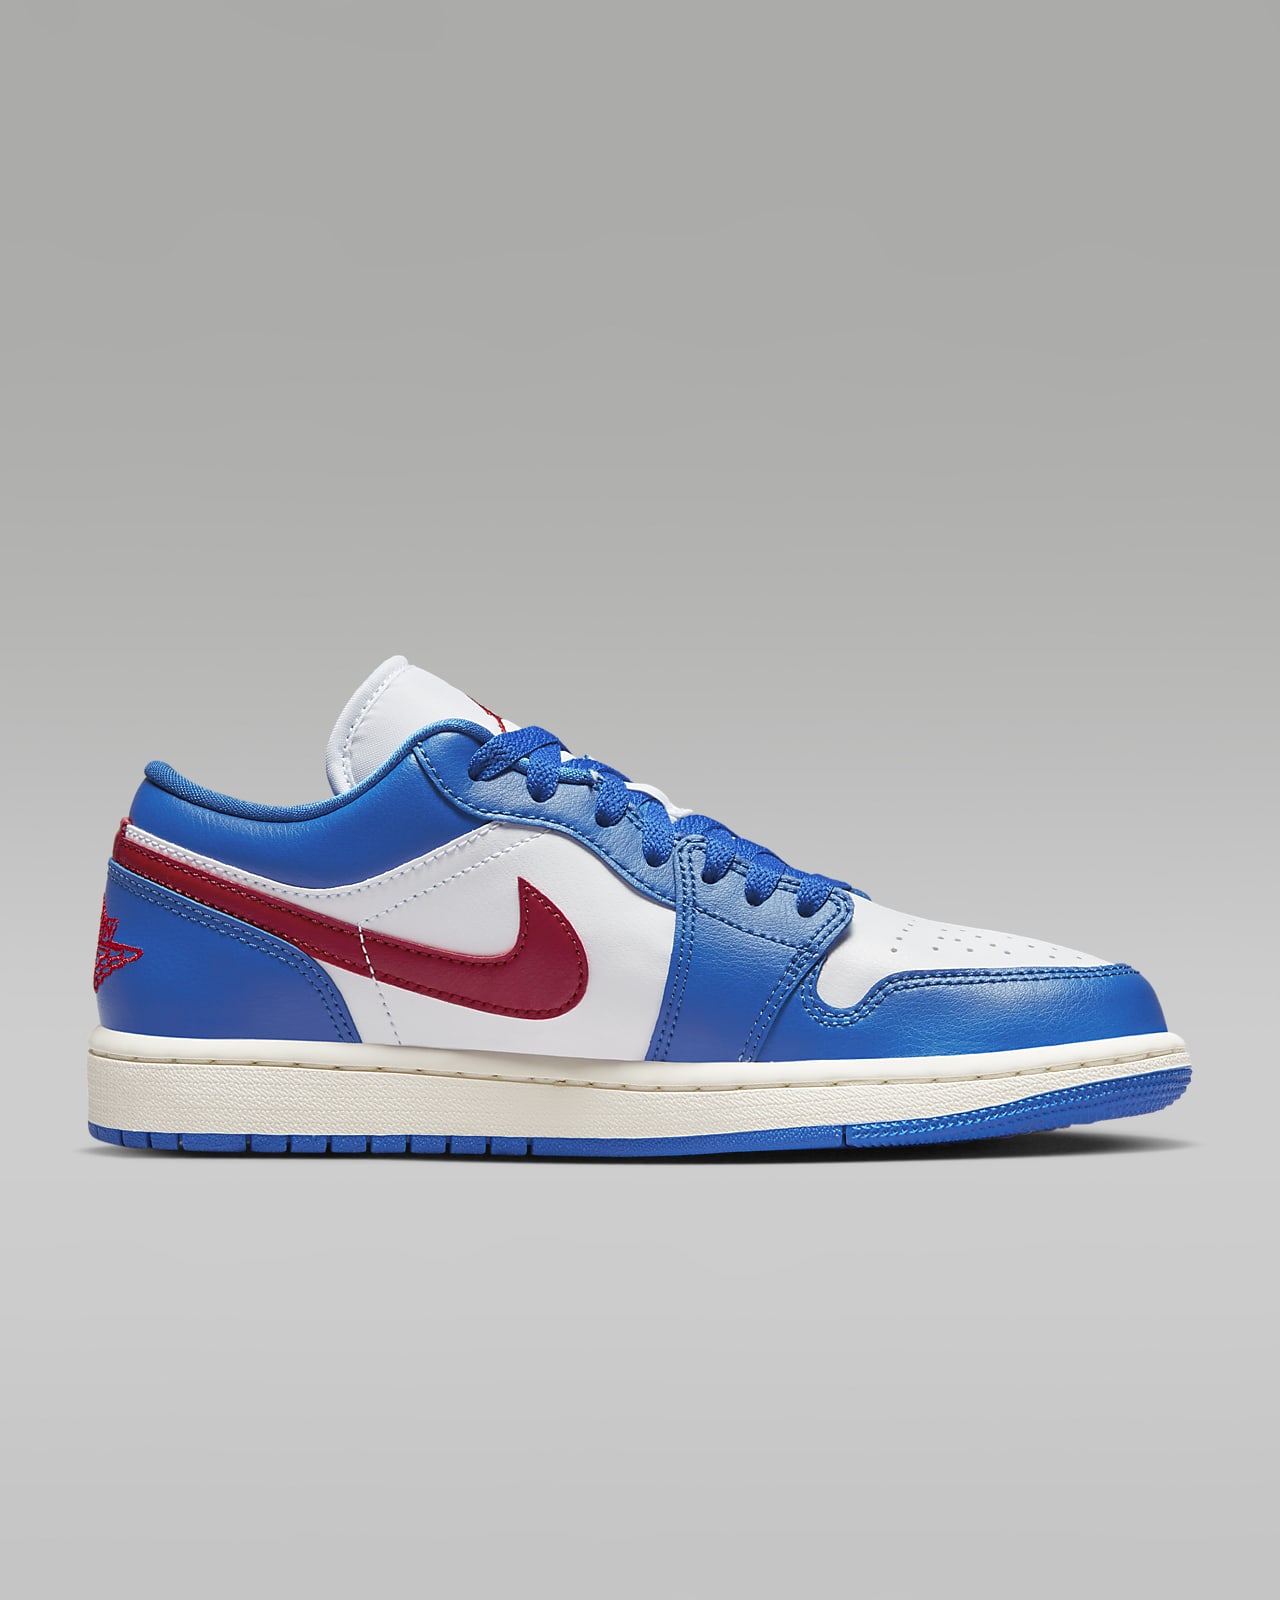 Air Jordan 1 Low Women's Shoe, by Nike Size 7 (Blue)